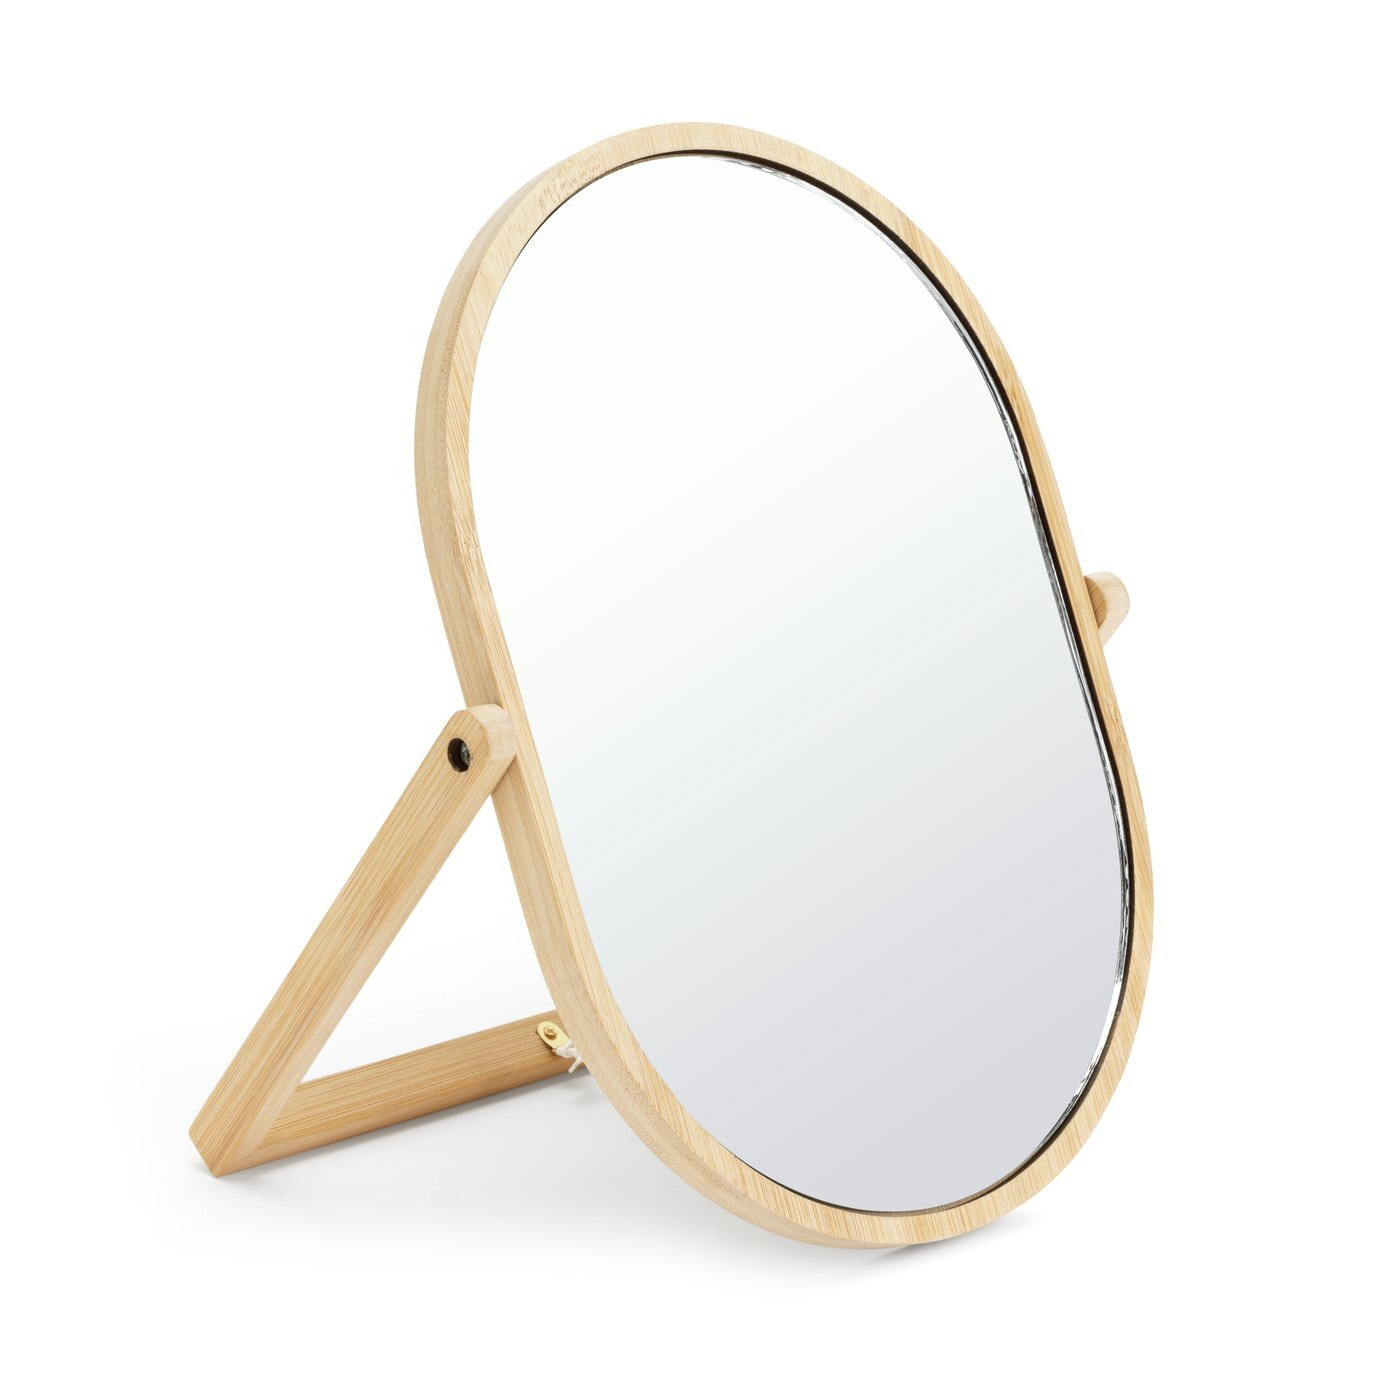 Innova Bamboo Vanity Dressing Table Mirror - Natural - image 1